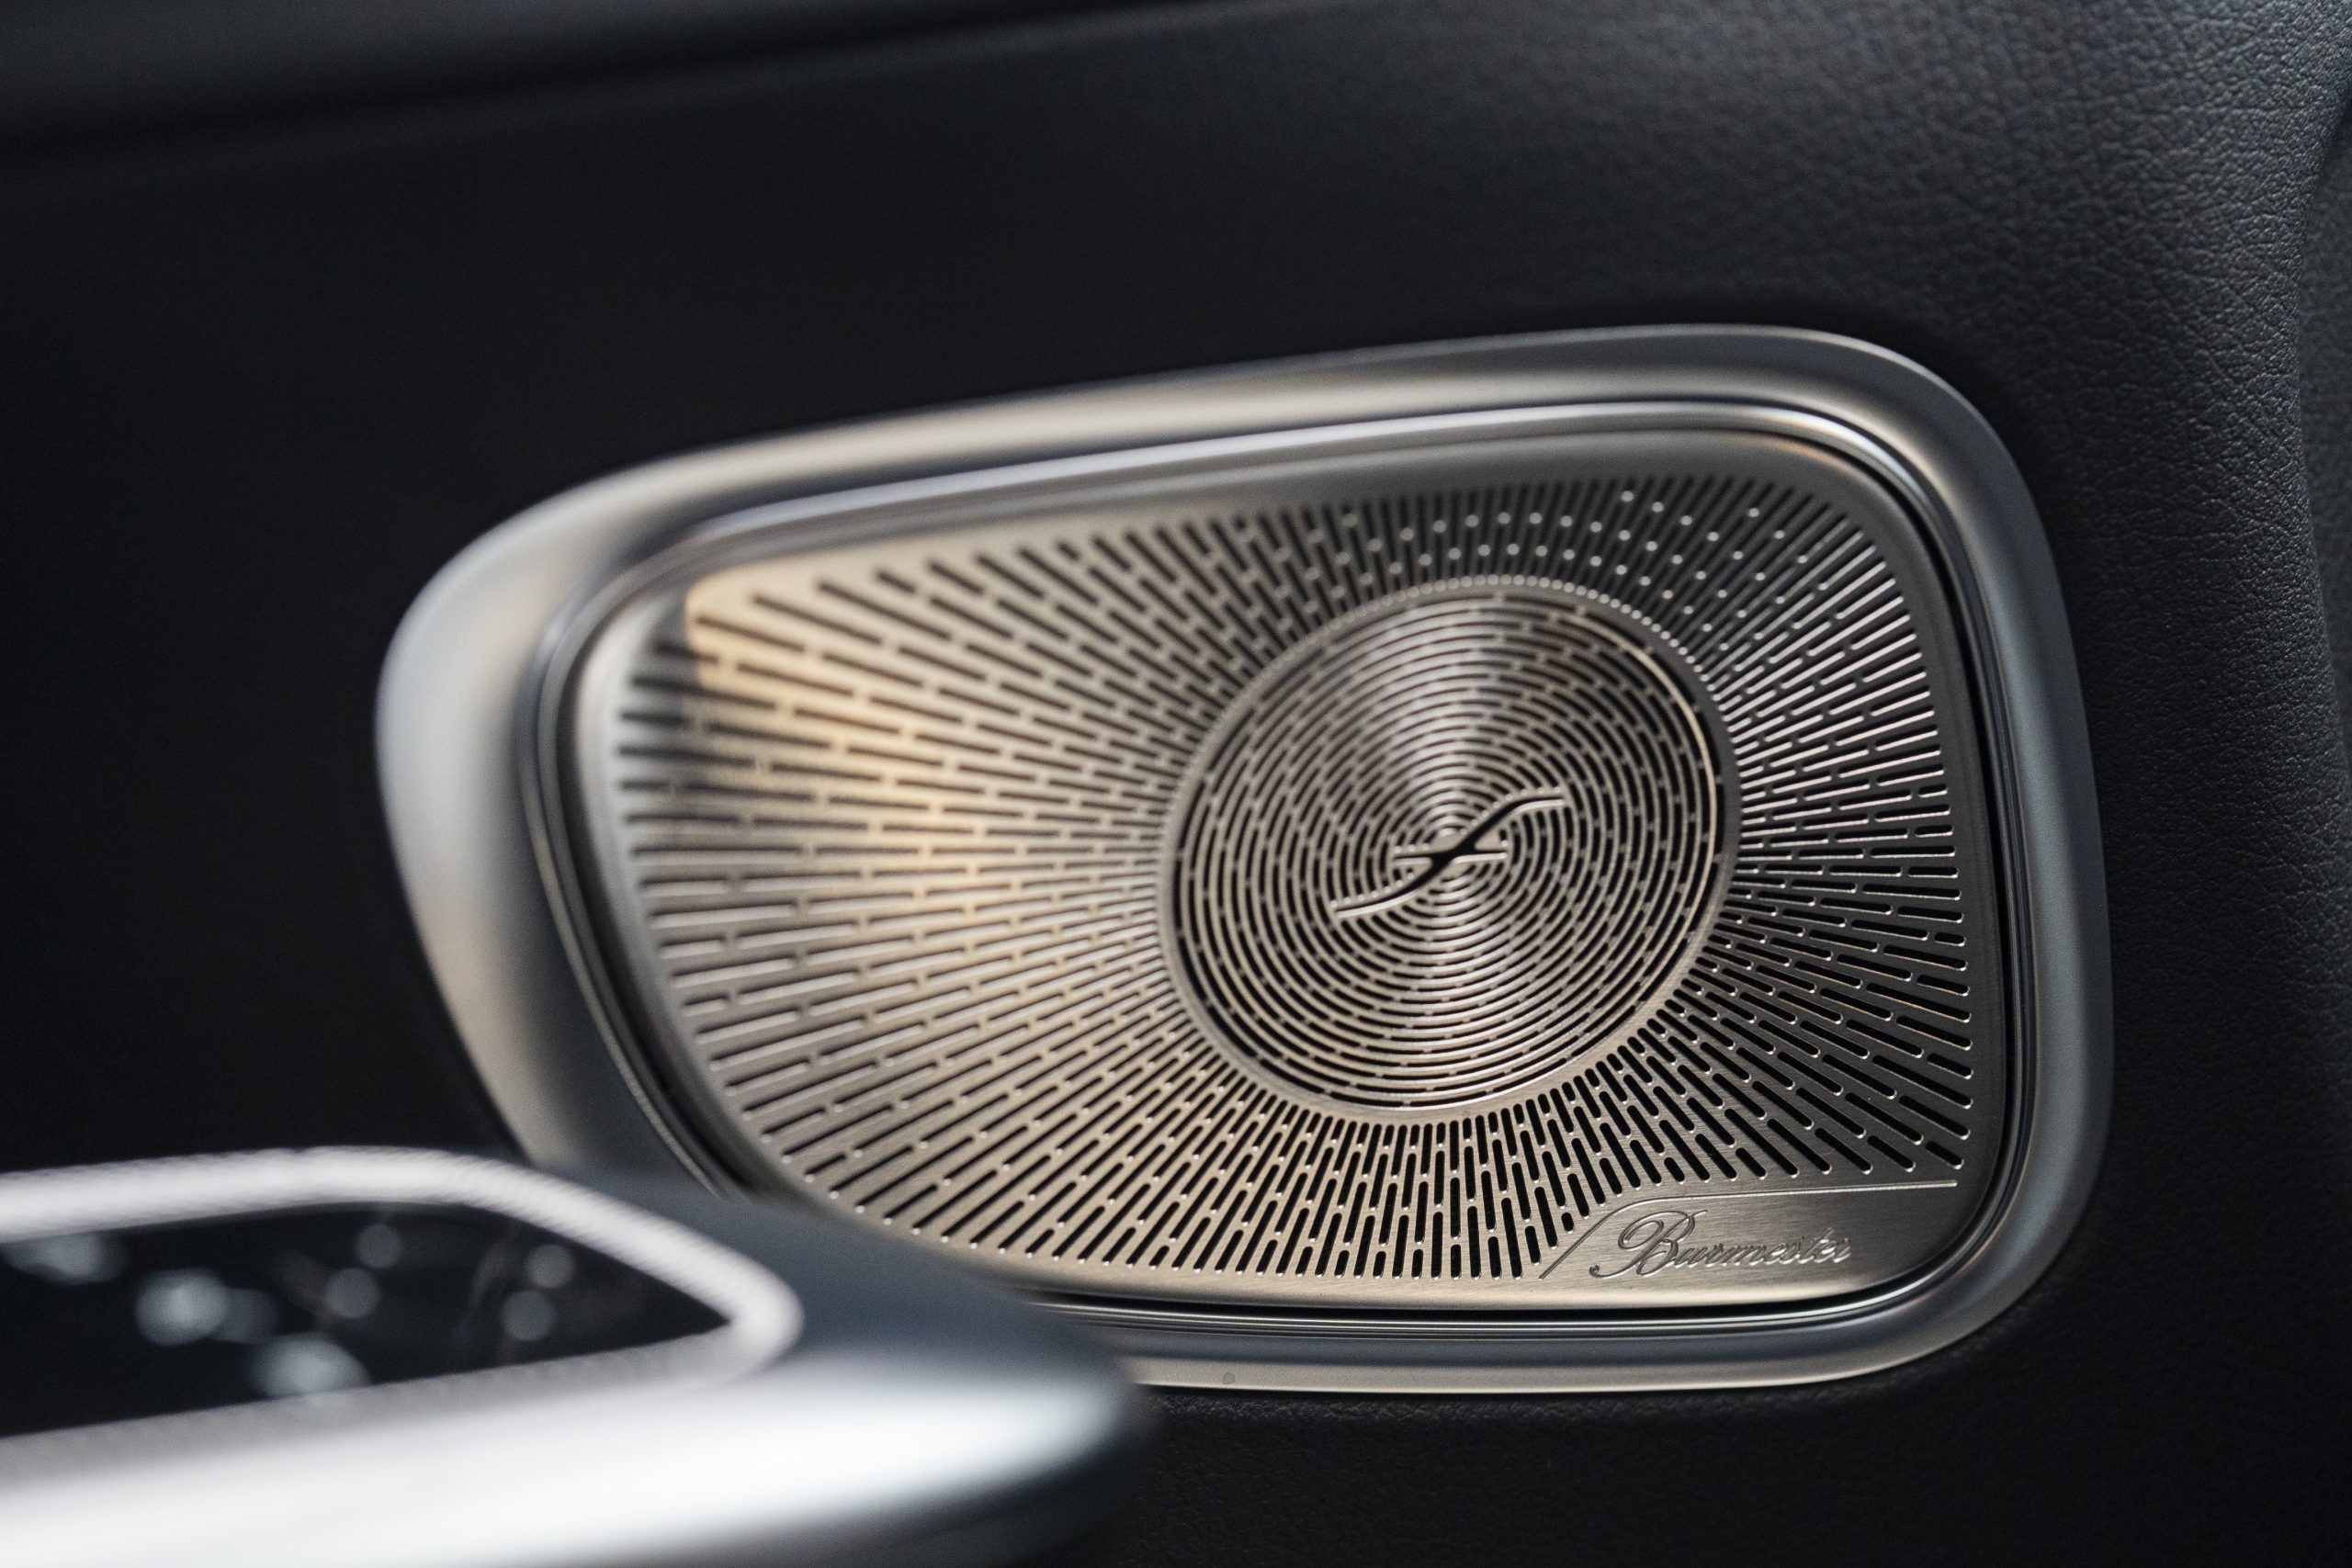 Mercedes-Benz Glc Burmester 3d Surround Sound System